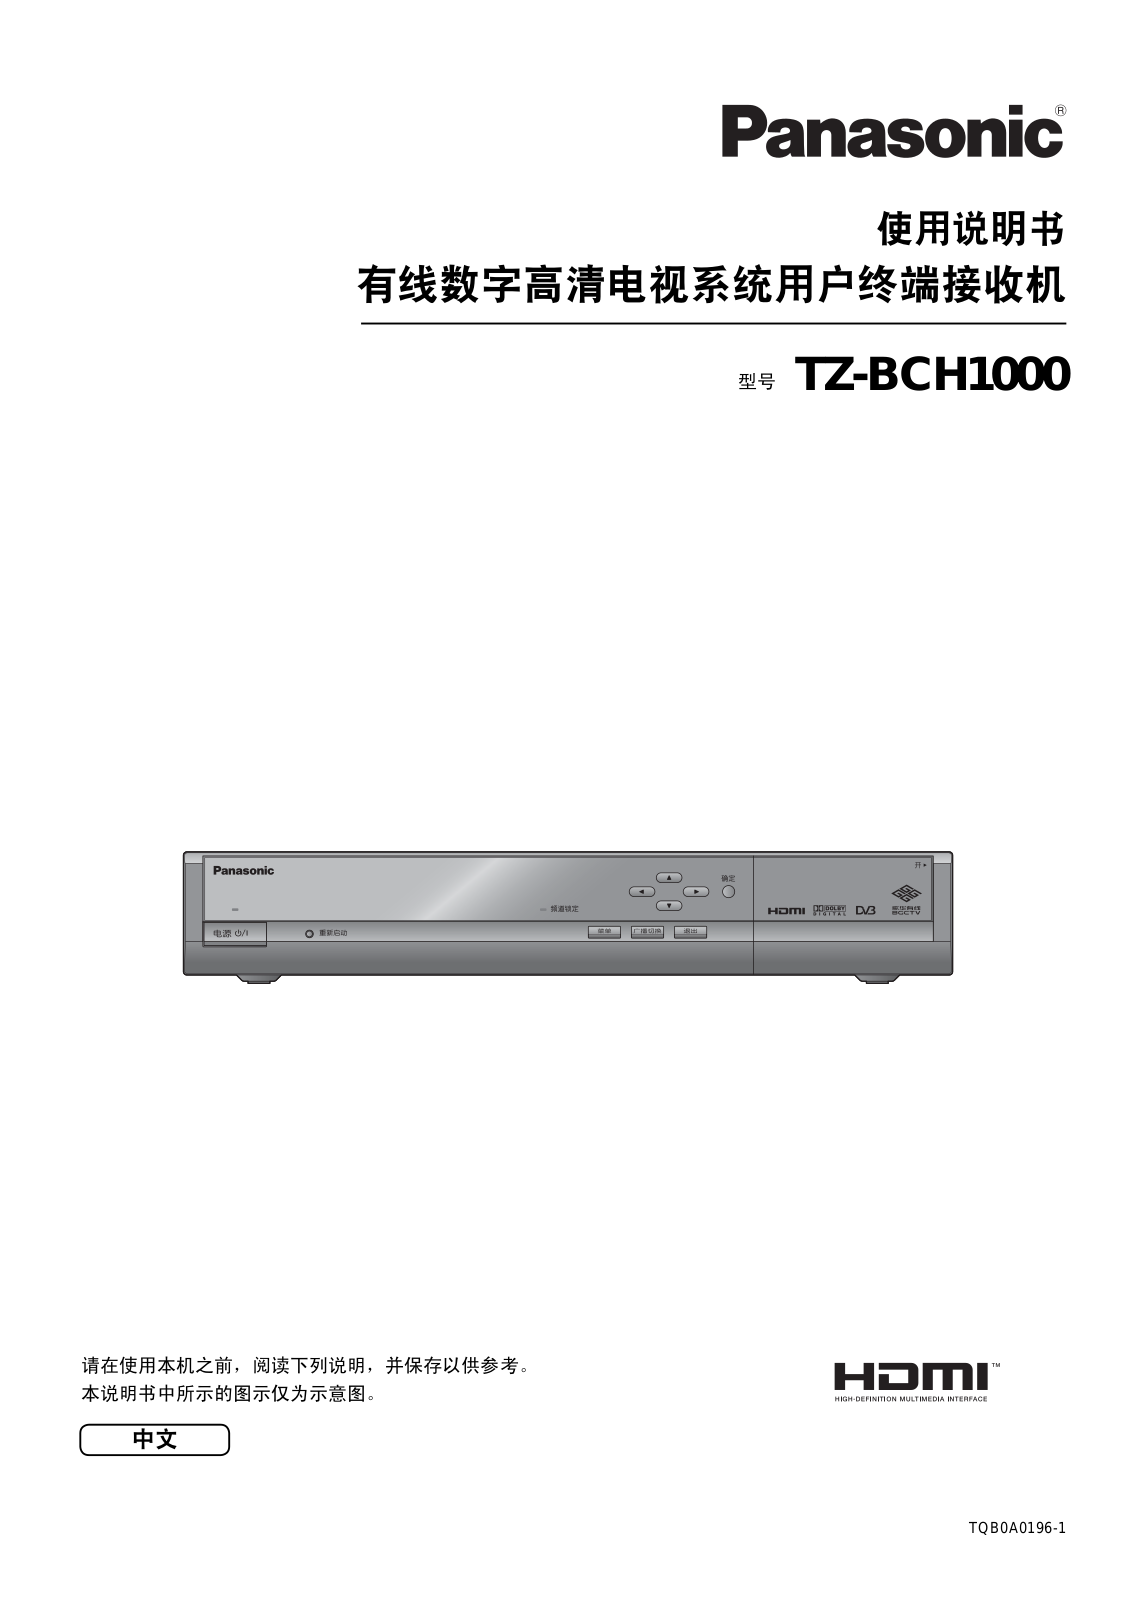 Panasonic TZ-BCH1000 User Manual